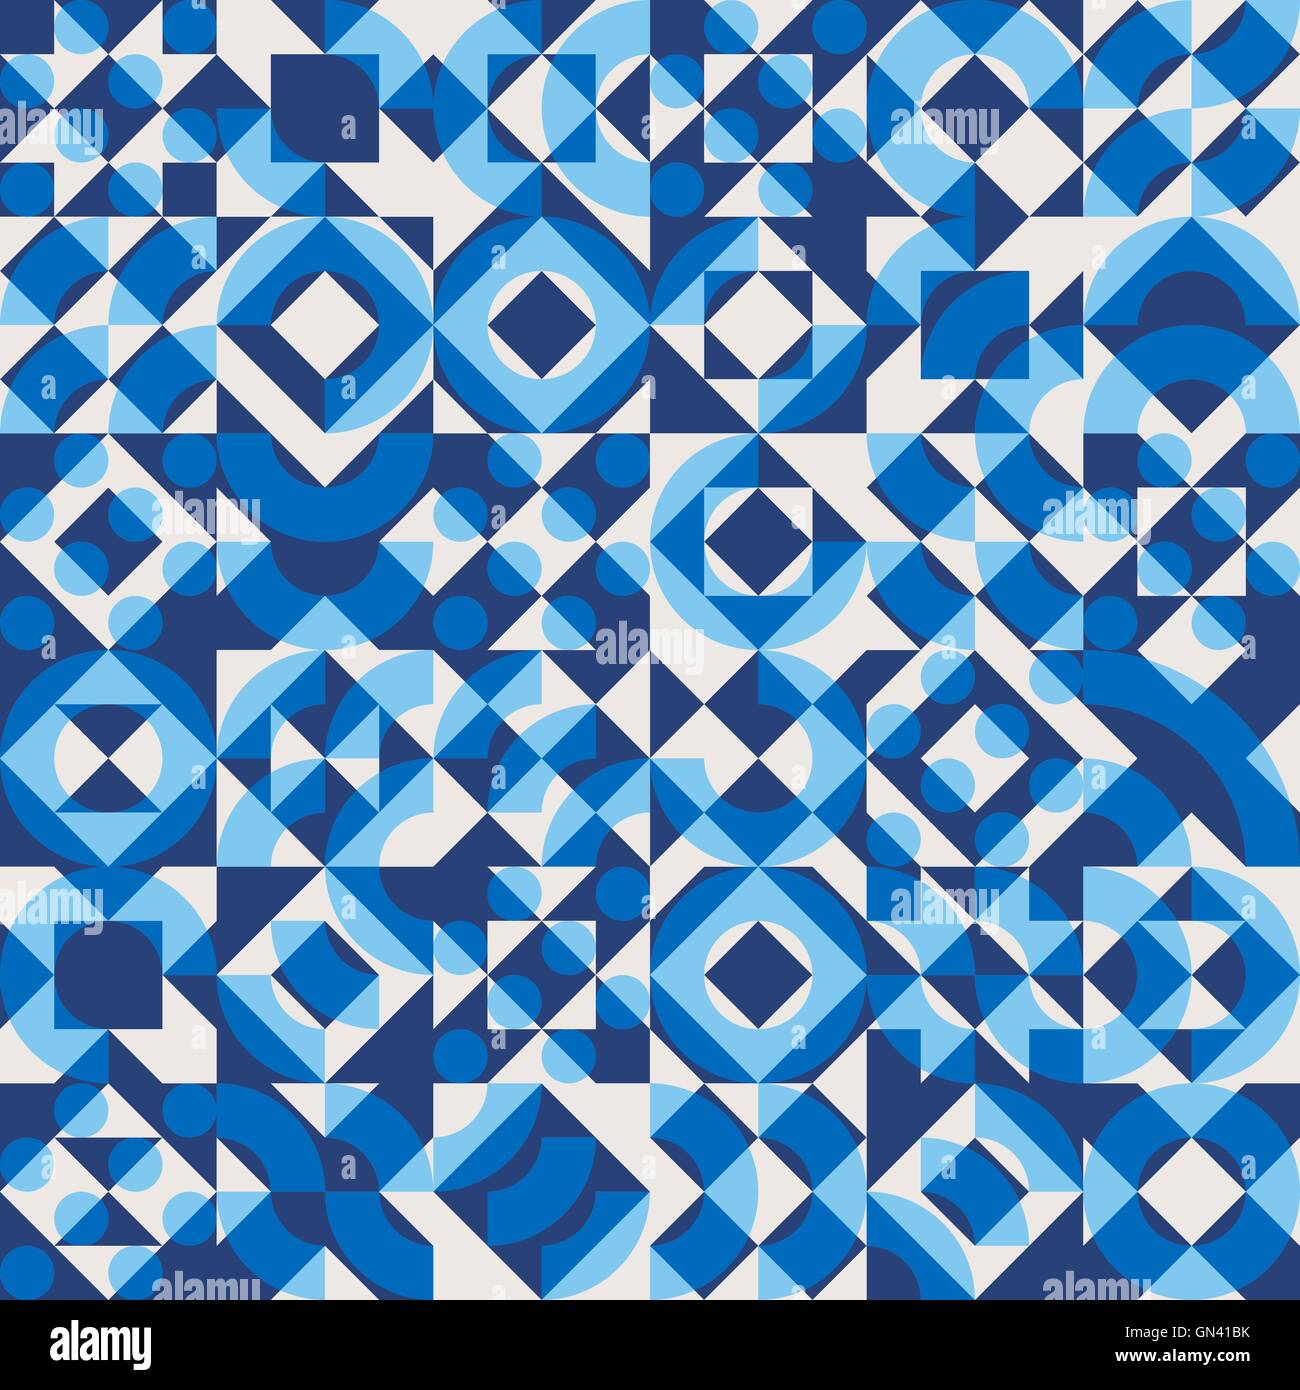 Vector Seamless Navy Blue Color Overlay Irregular Geometric Blocks Square Quilt Pattern Stock Vector